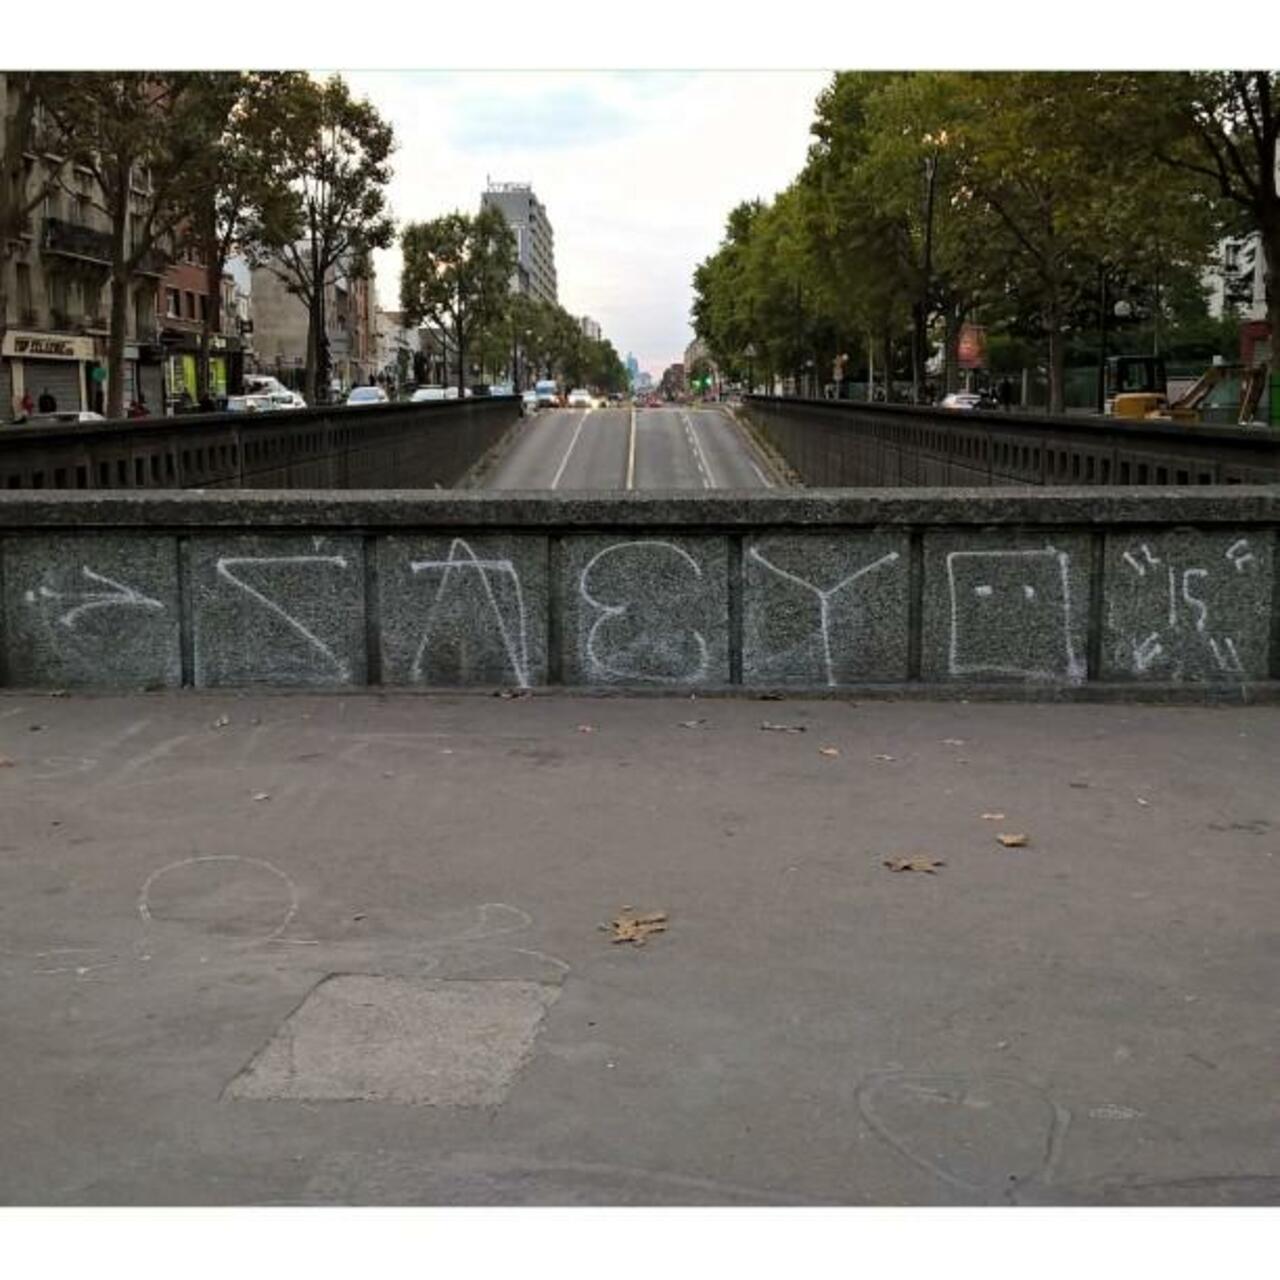 SAEYO
#PALcrew #PeaceAndLoveCrew #streetart #graffiti #graff #art #fatcap #bombing #sprayart #spraycanart #wallart … http://t.co/o8CI556nUe